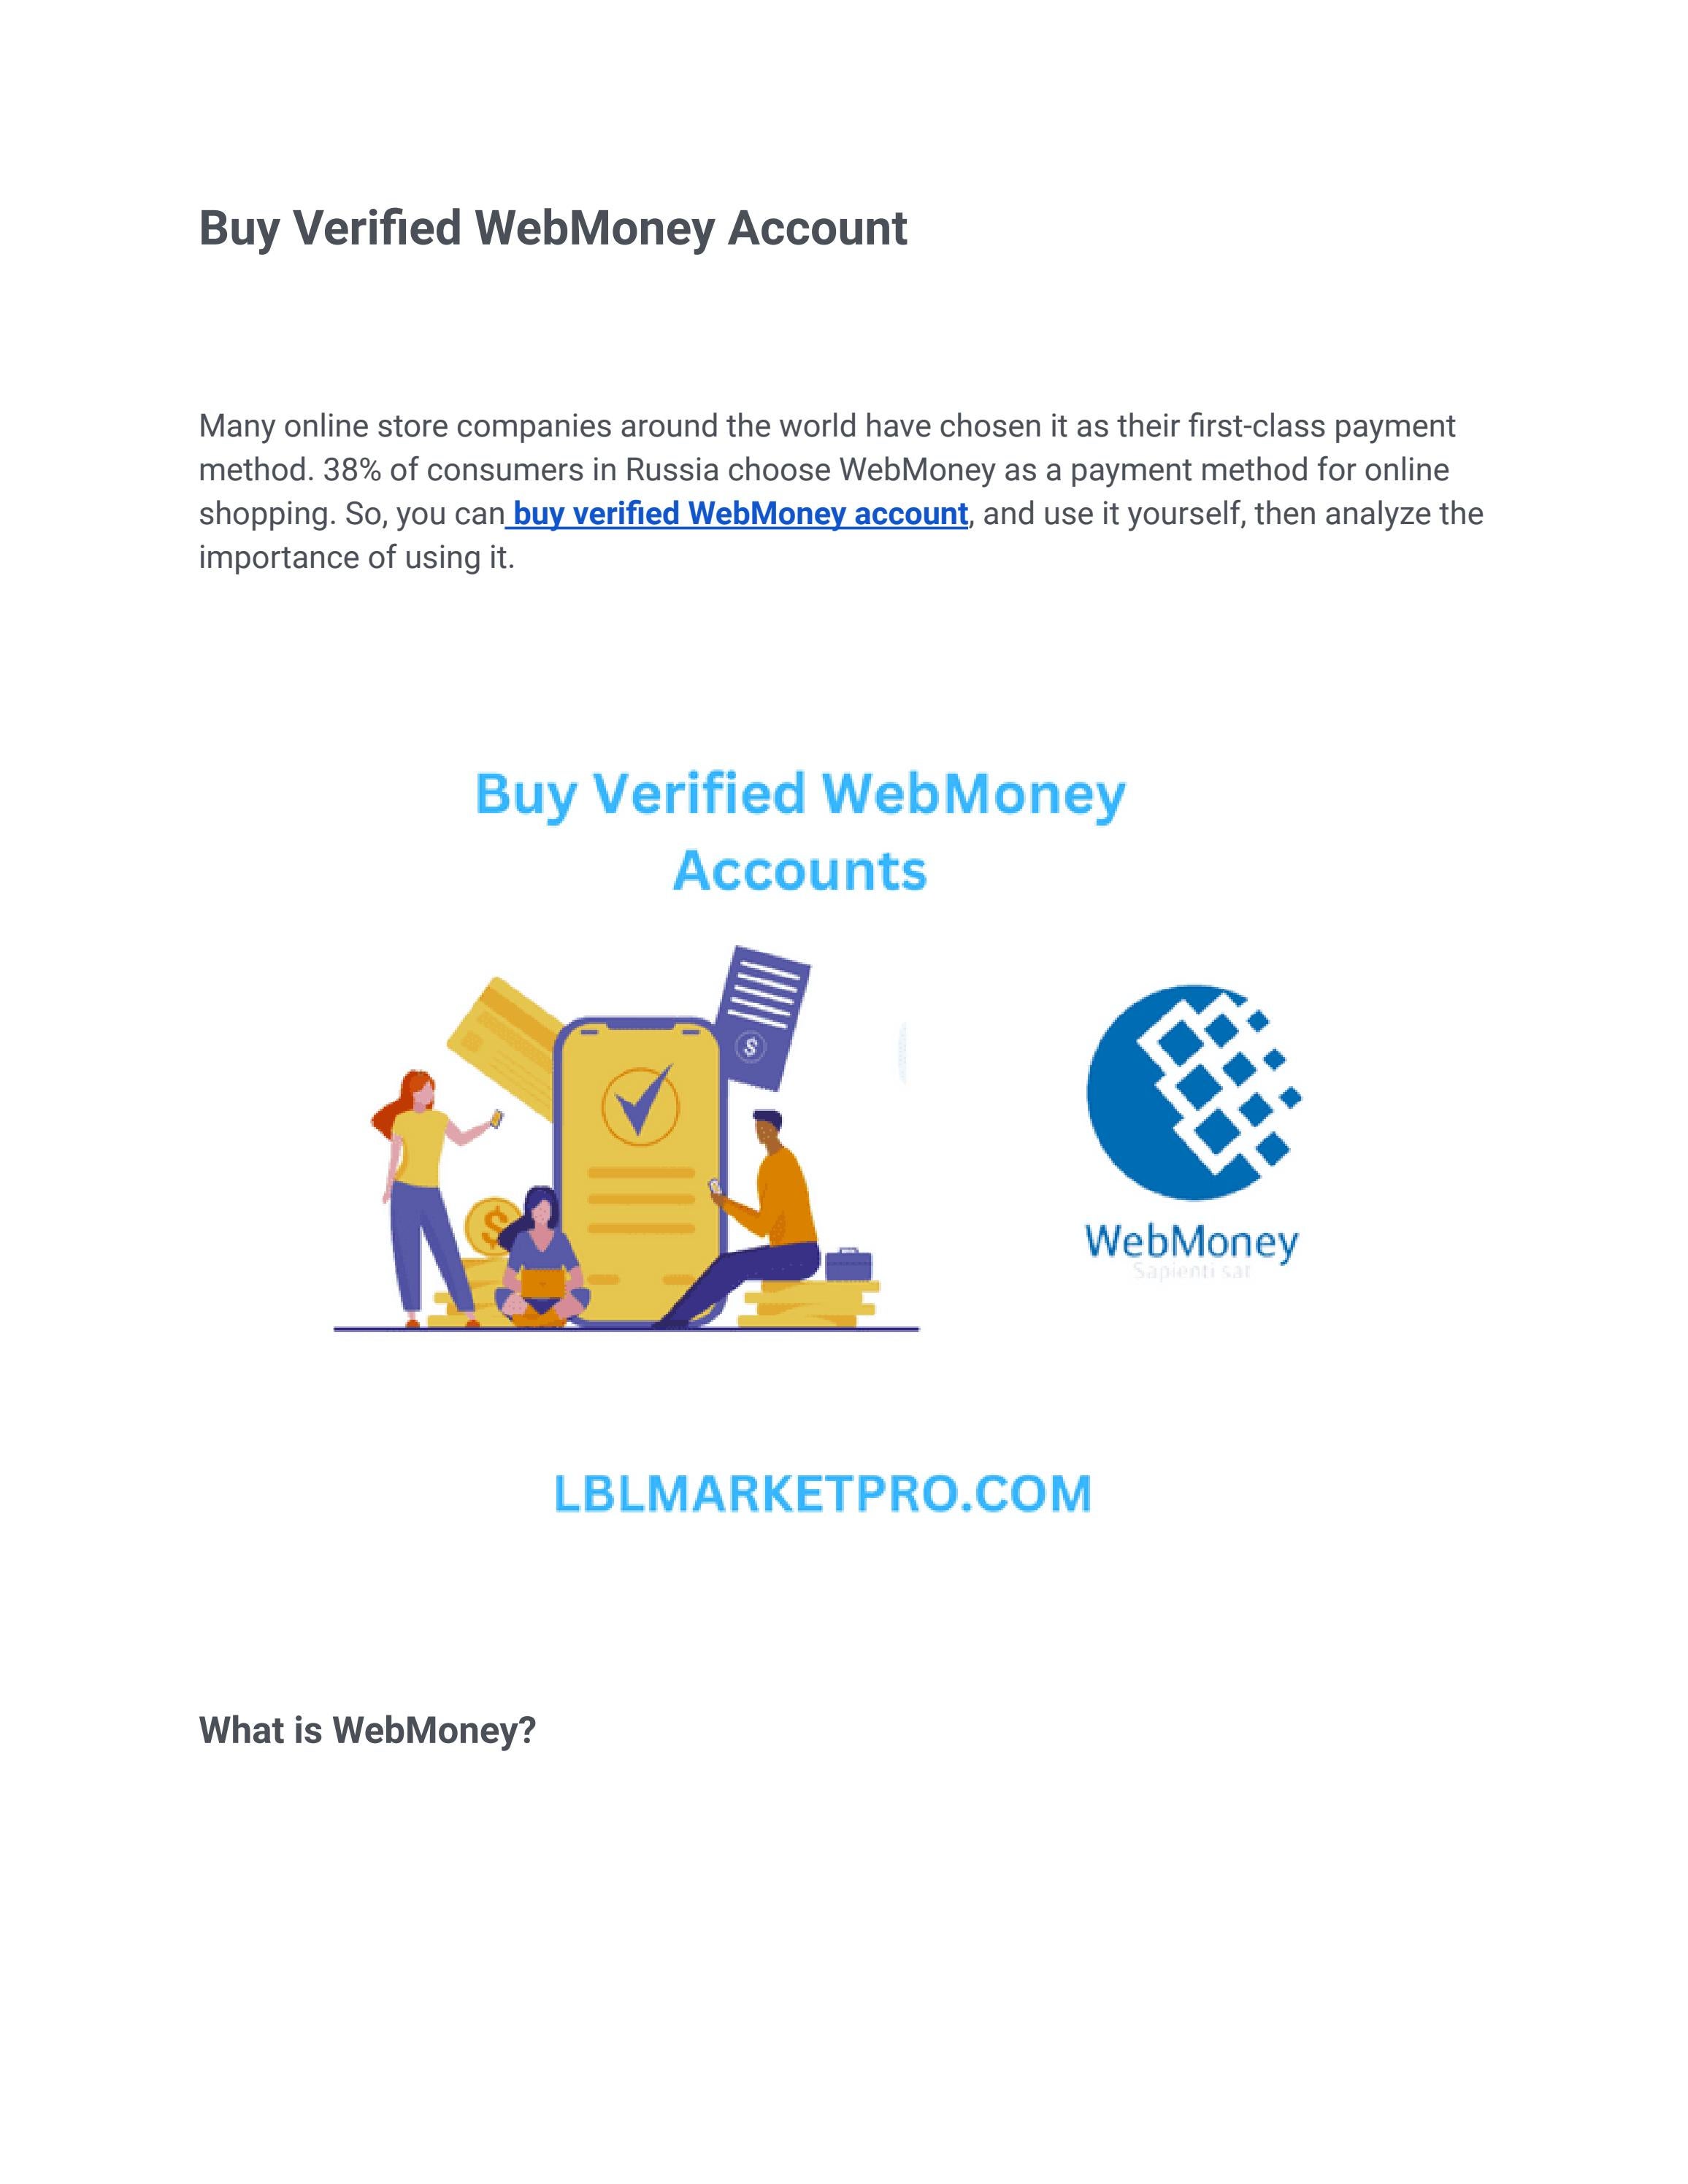 Automated exchange of WebMoney currency